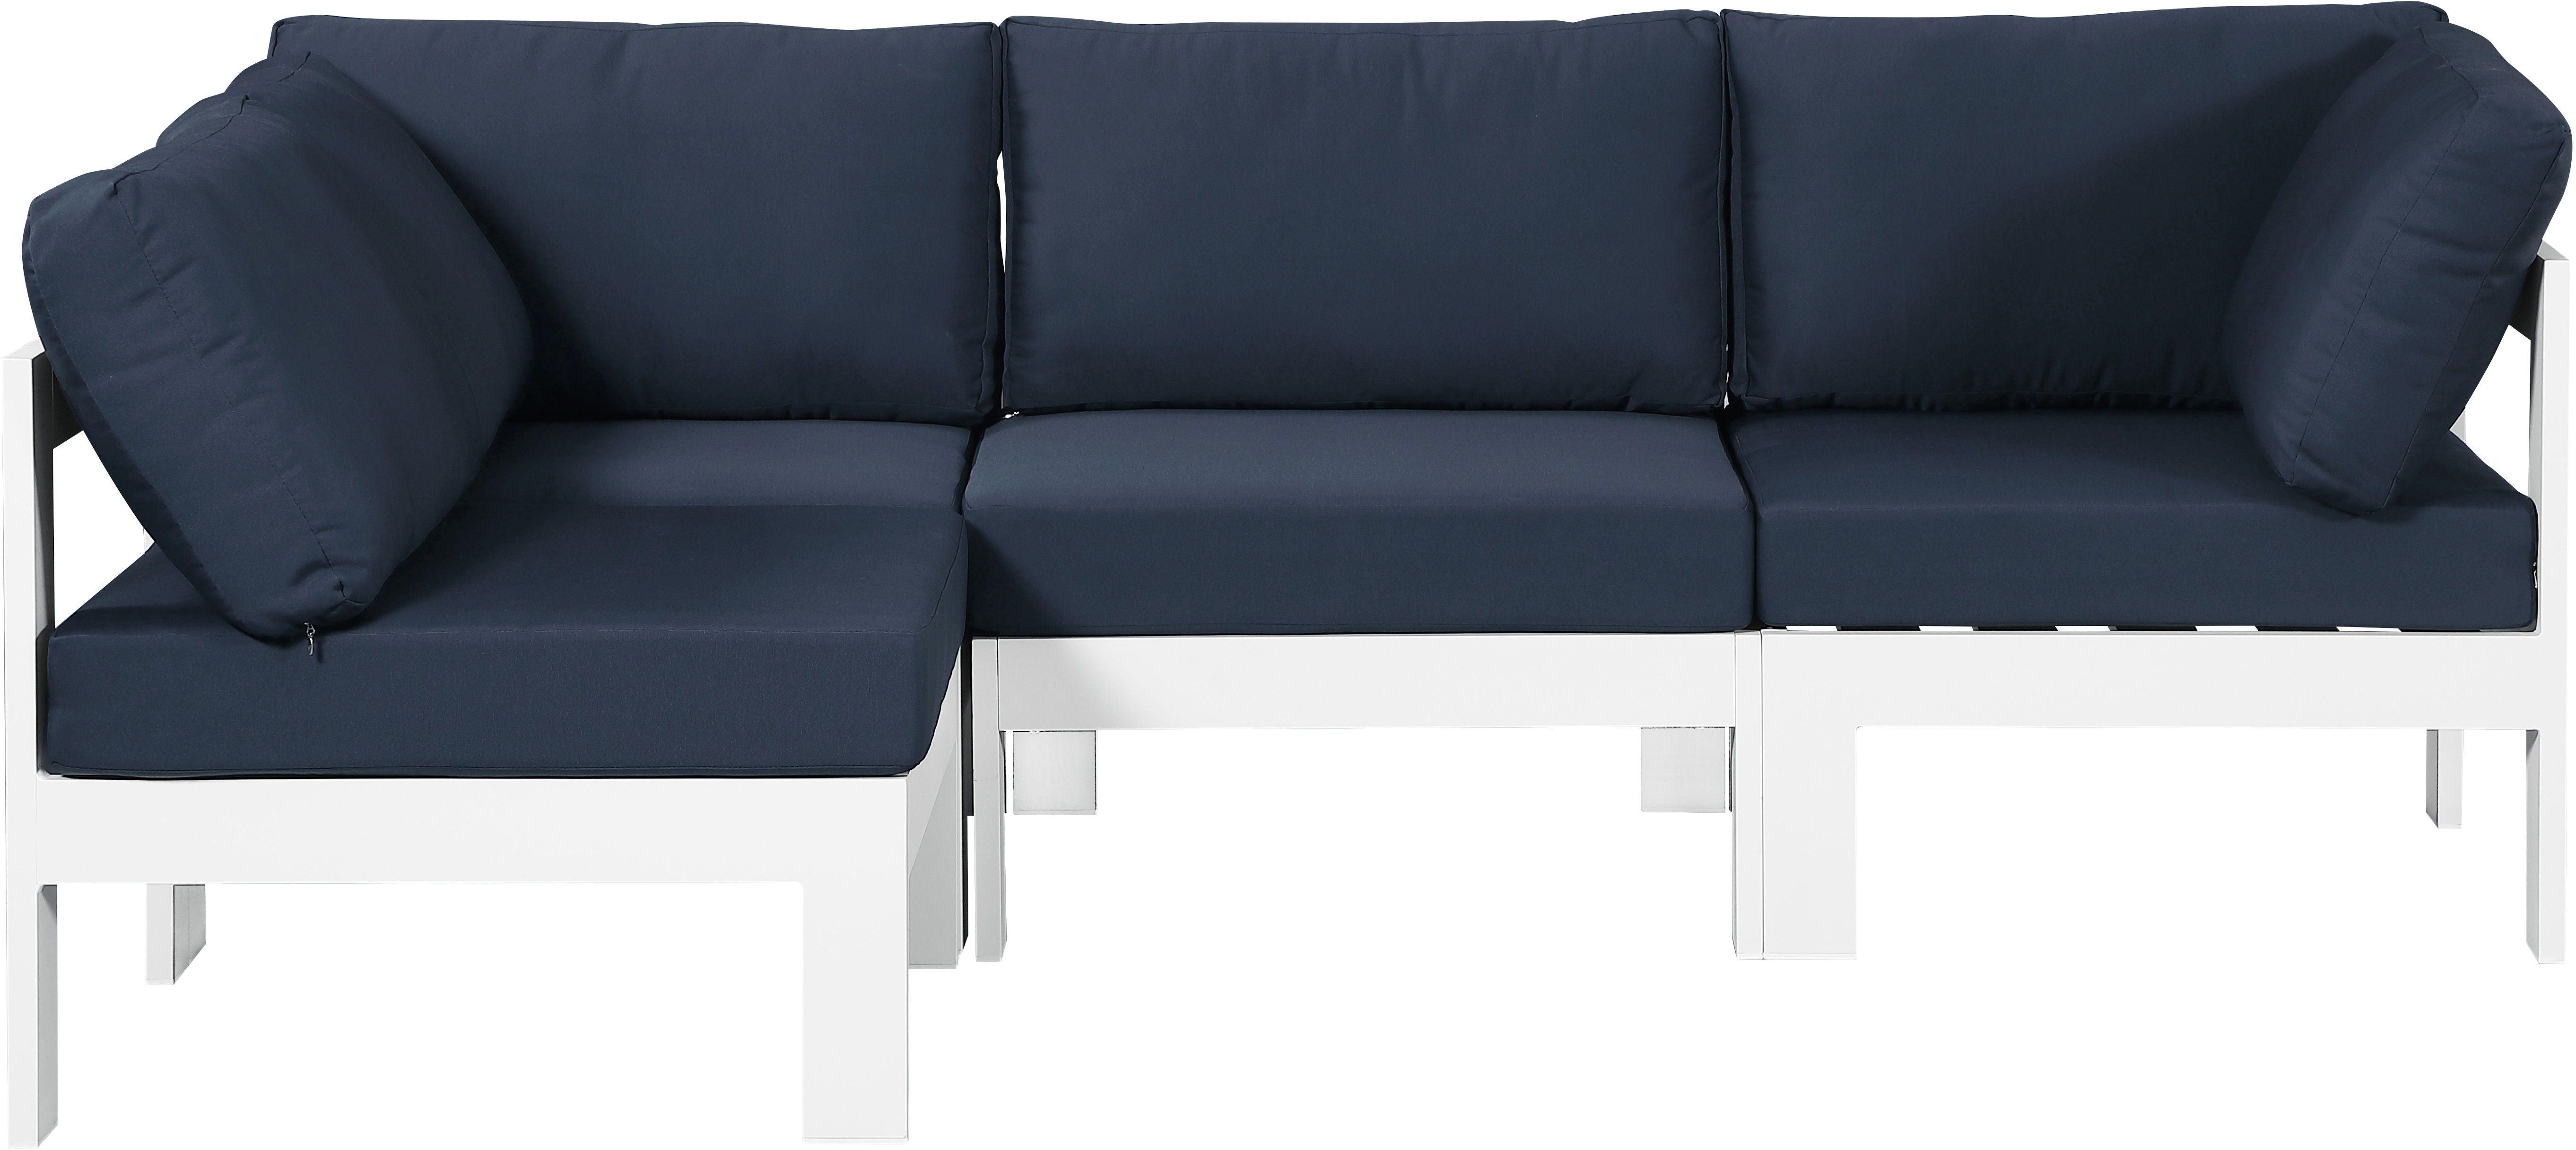 Meridian Furniture - Nizuc - Outdoor Patio Modular Sectional - Navy - 5th Avenue Furniture